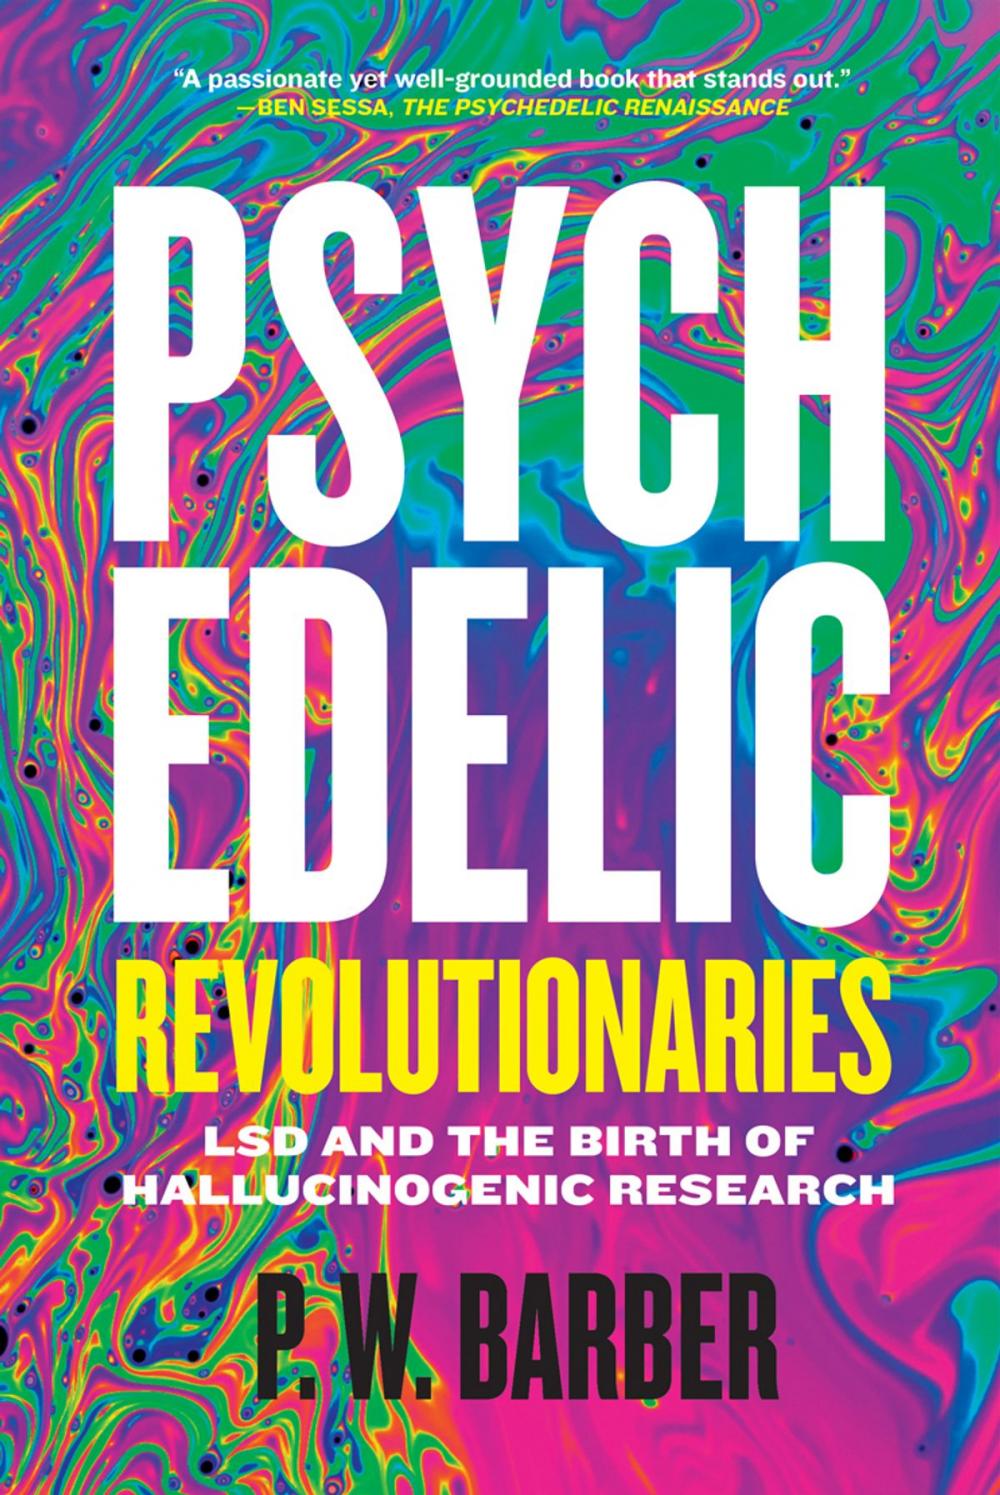 Big bigCover of Psychedelic Revolutionaries